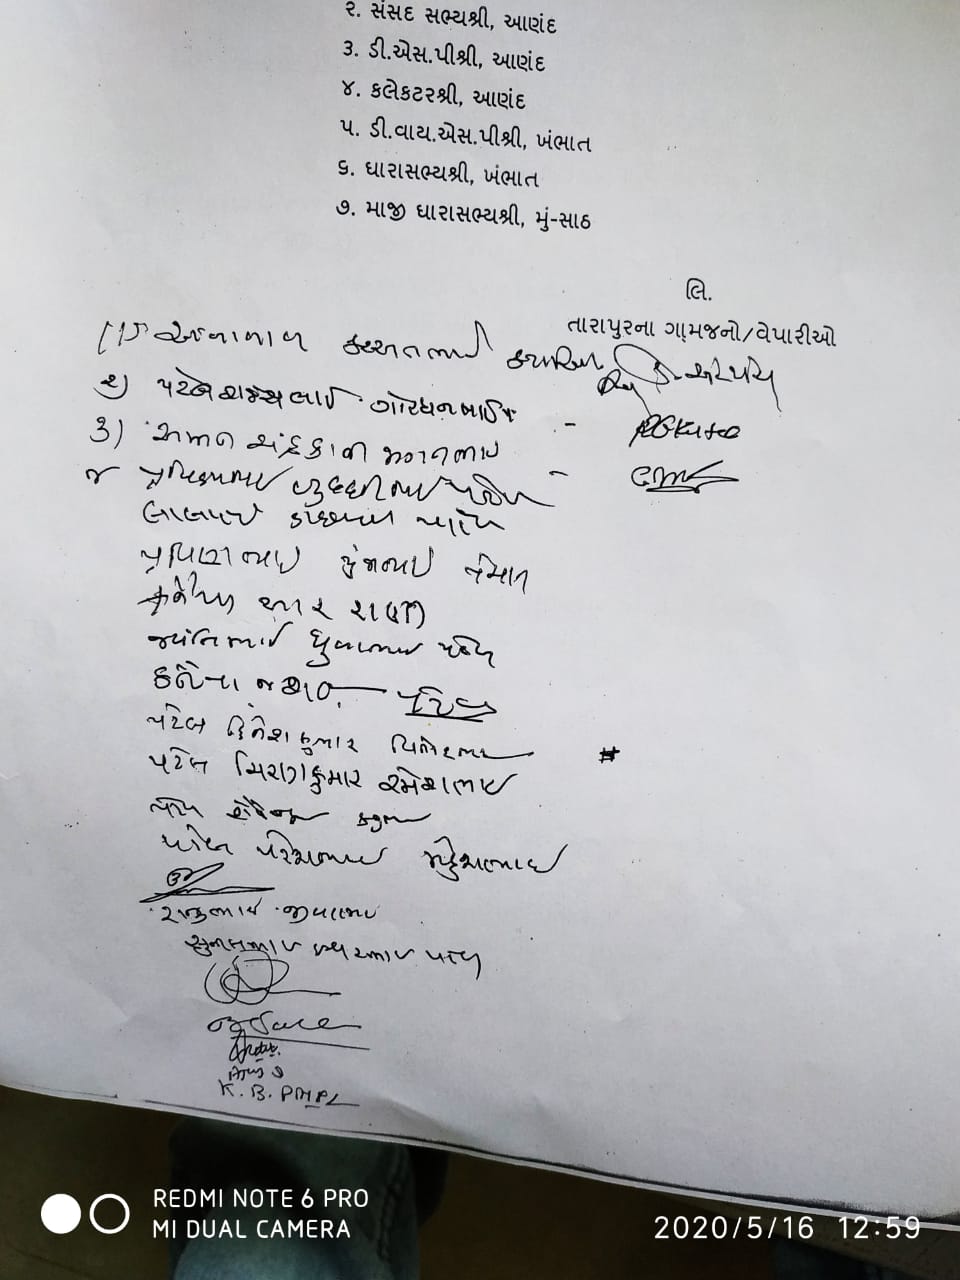 tarapur Citizens filed an application